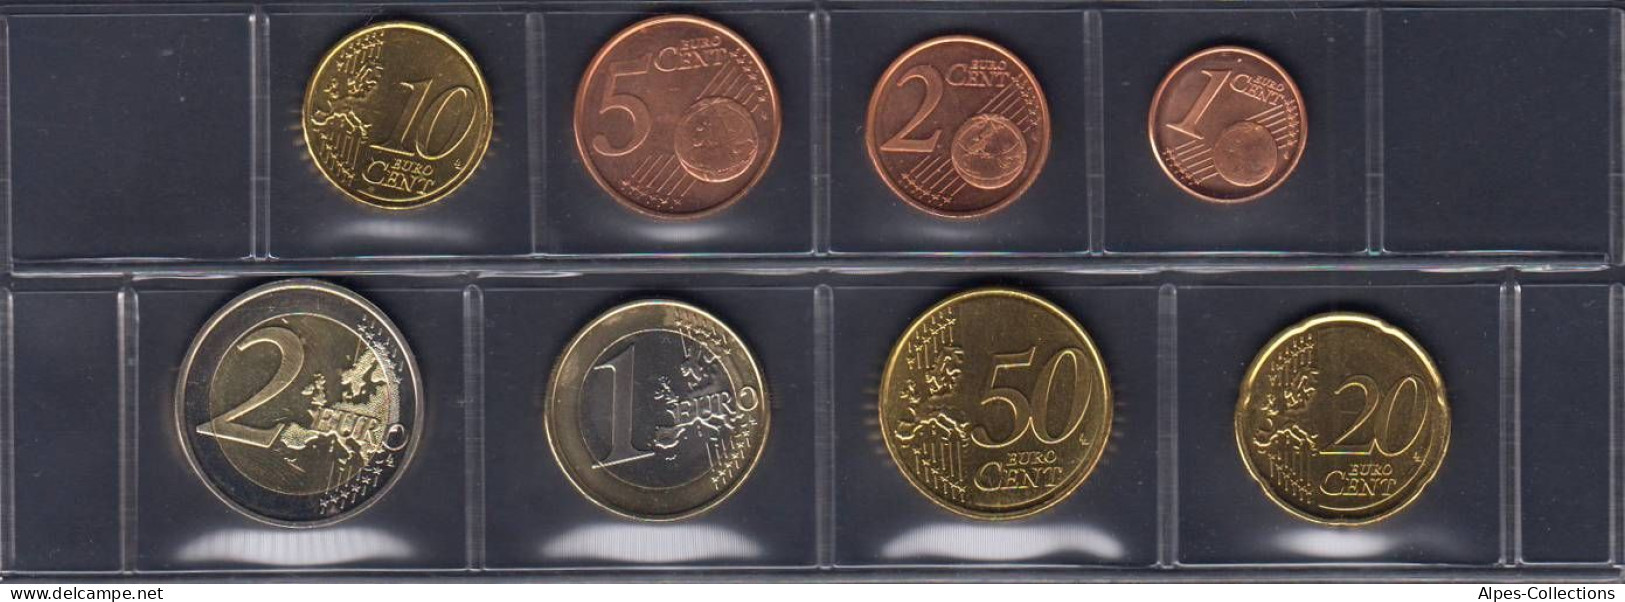 FIX2009.3 - SERIE FINLANDE - 2009 - 1 Cent à 2 Euros - Finnland